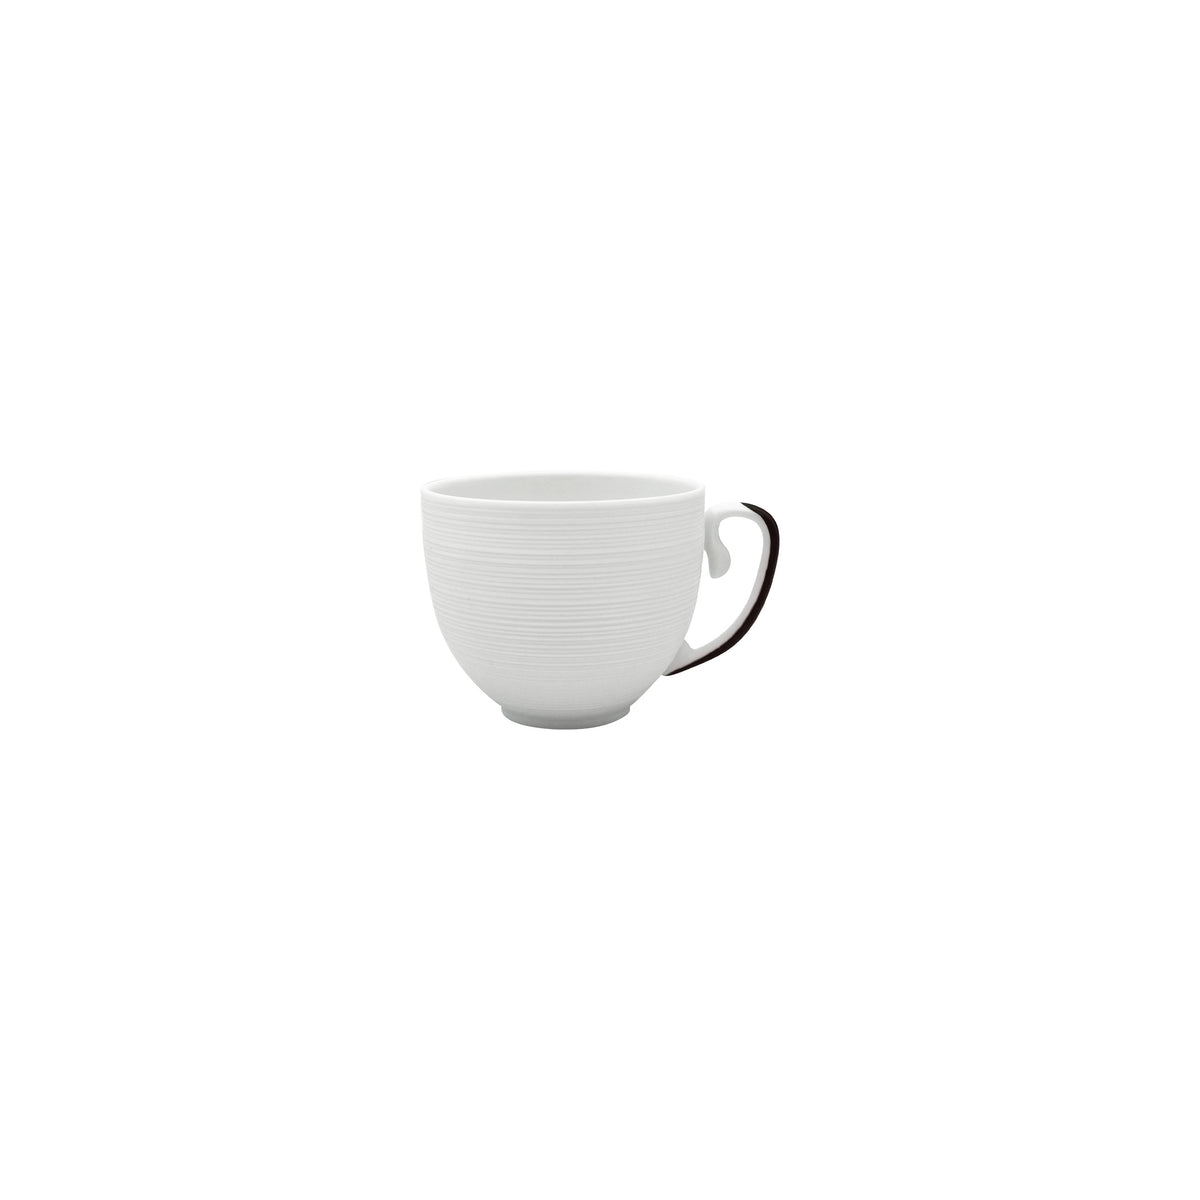 HEMISPHERE Sepia - Coffee set (cup & saucer)